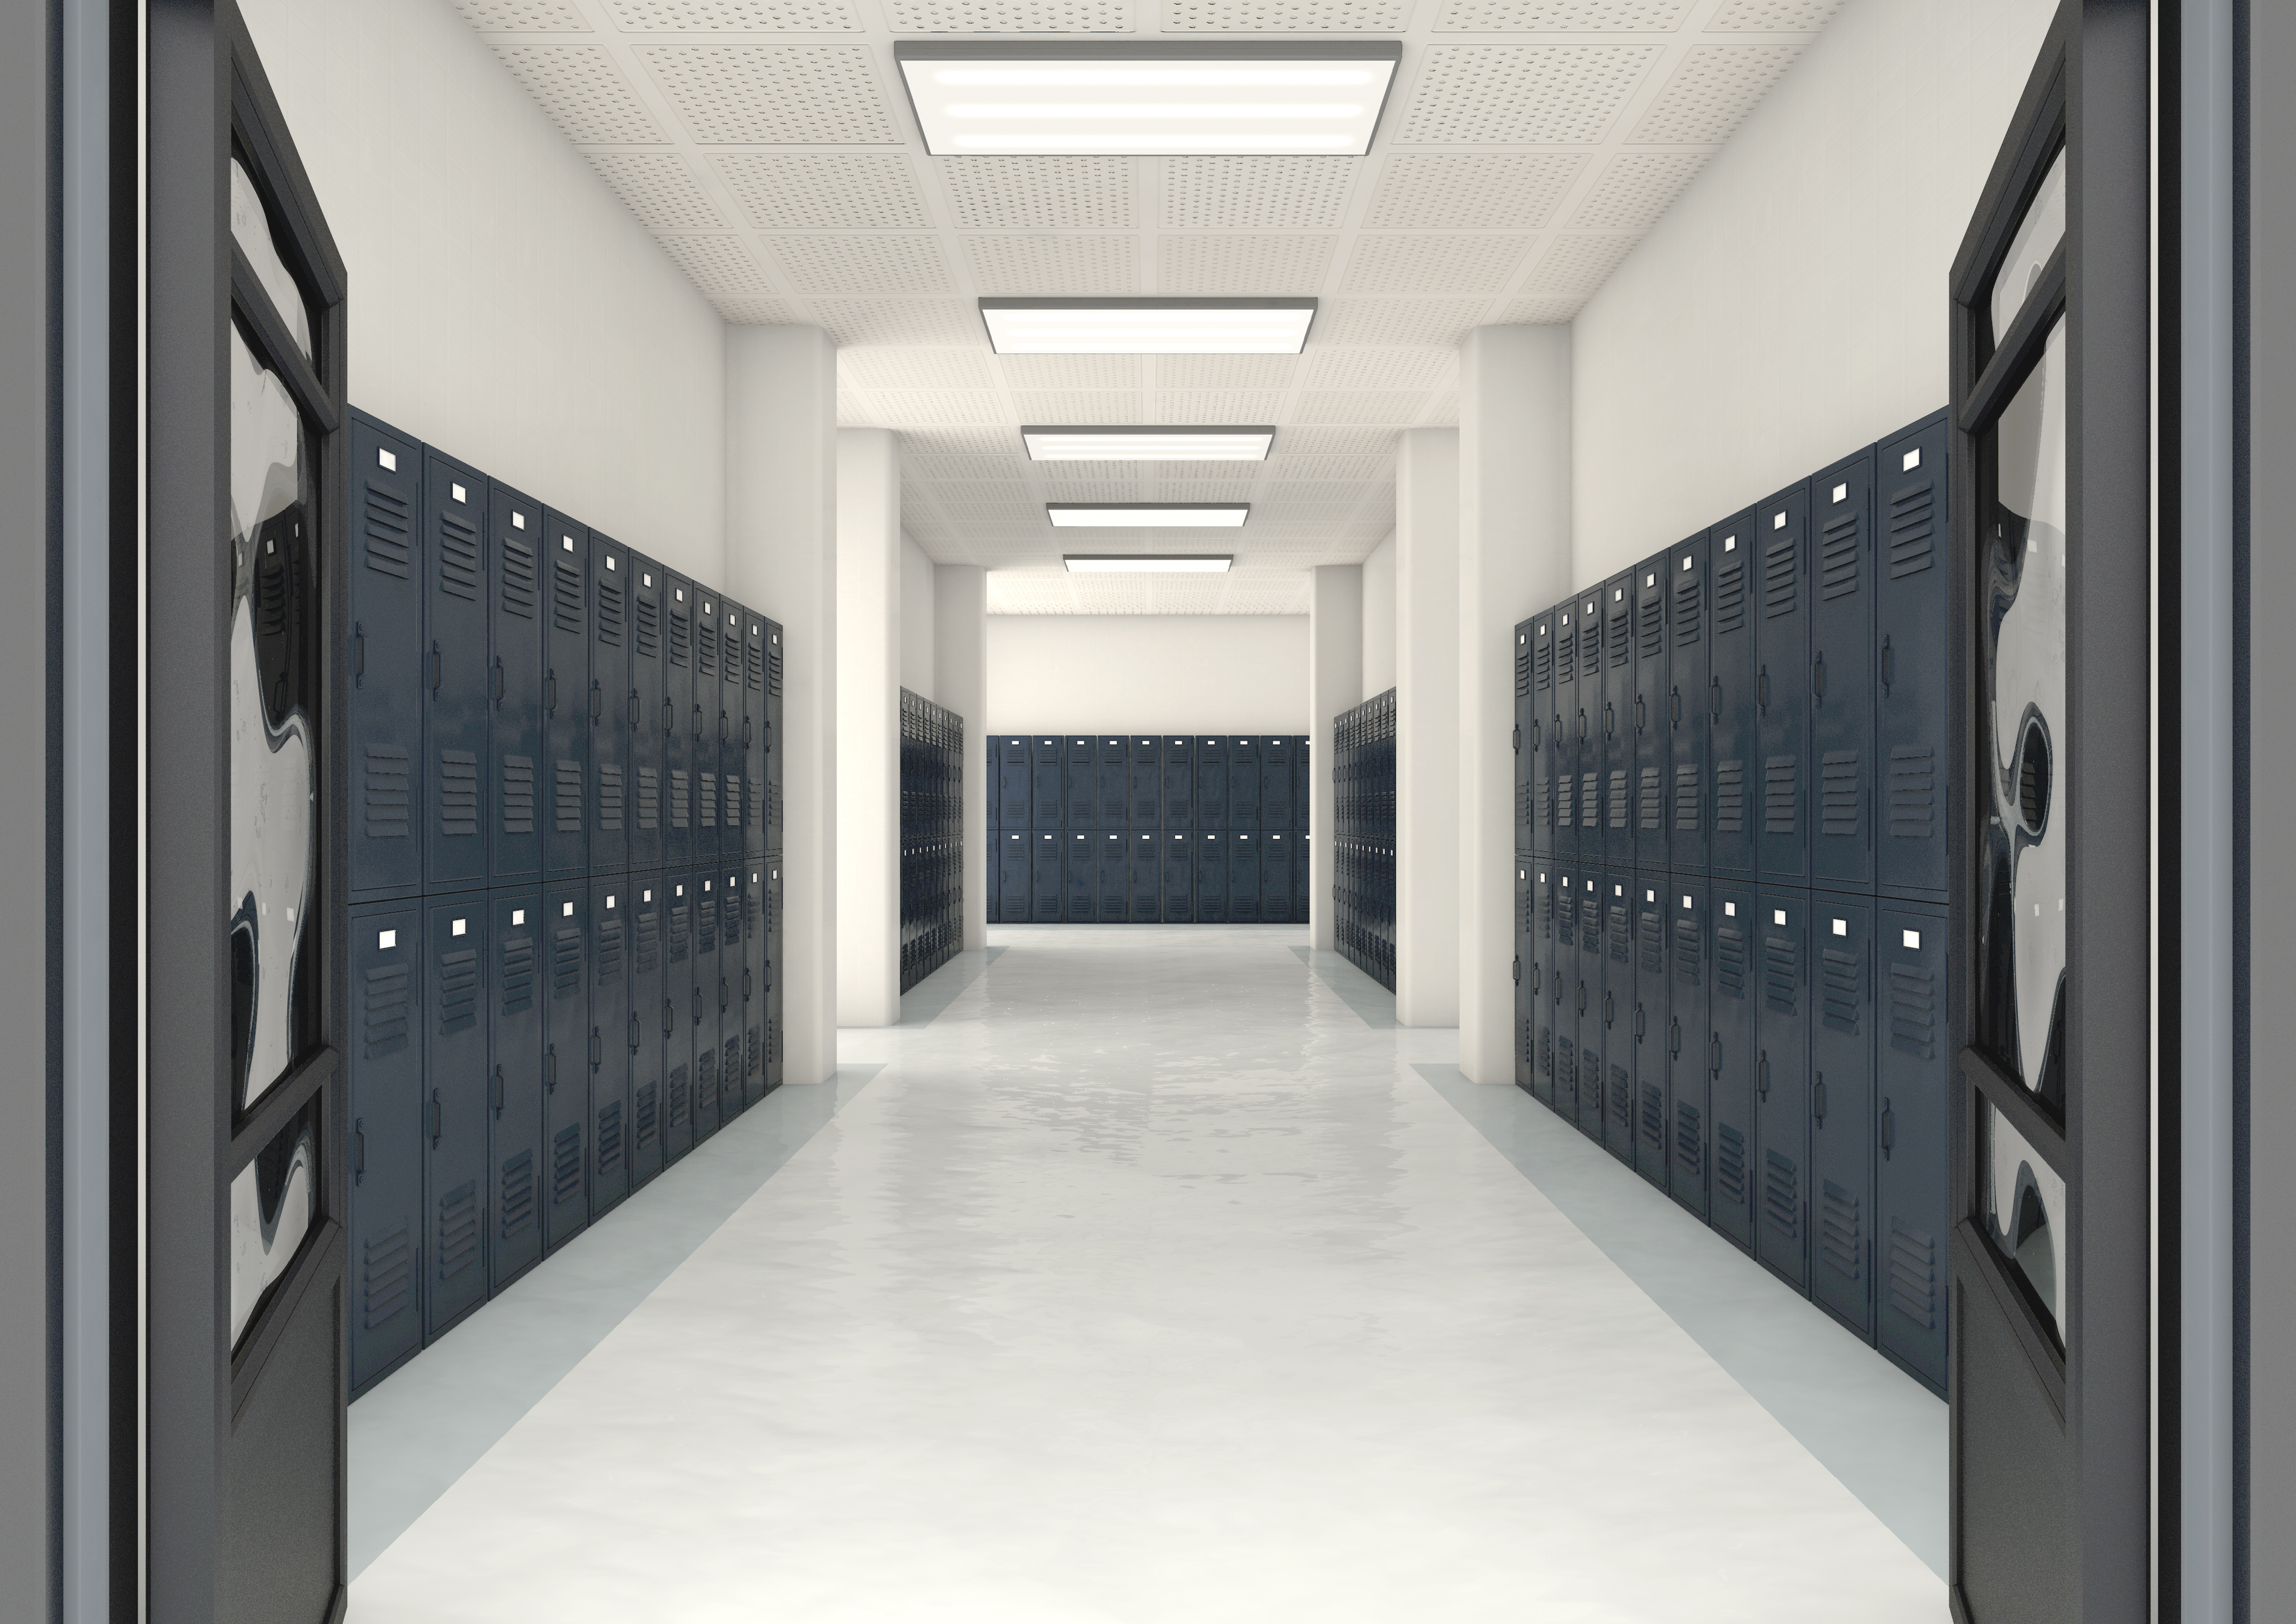 school hallway with lockers on each side